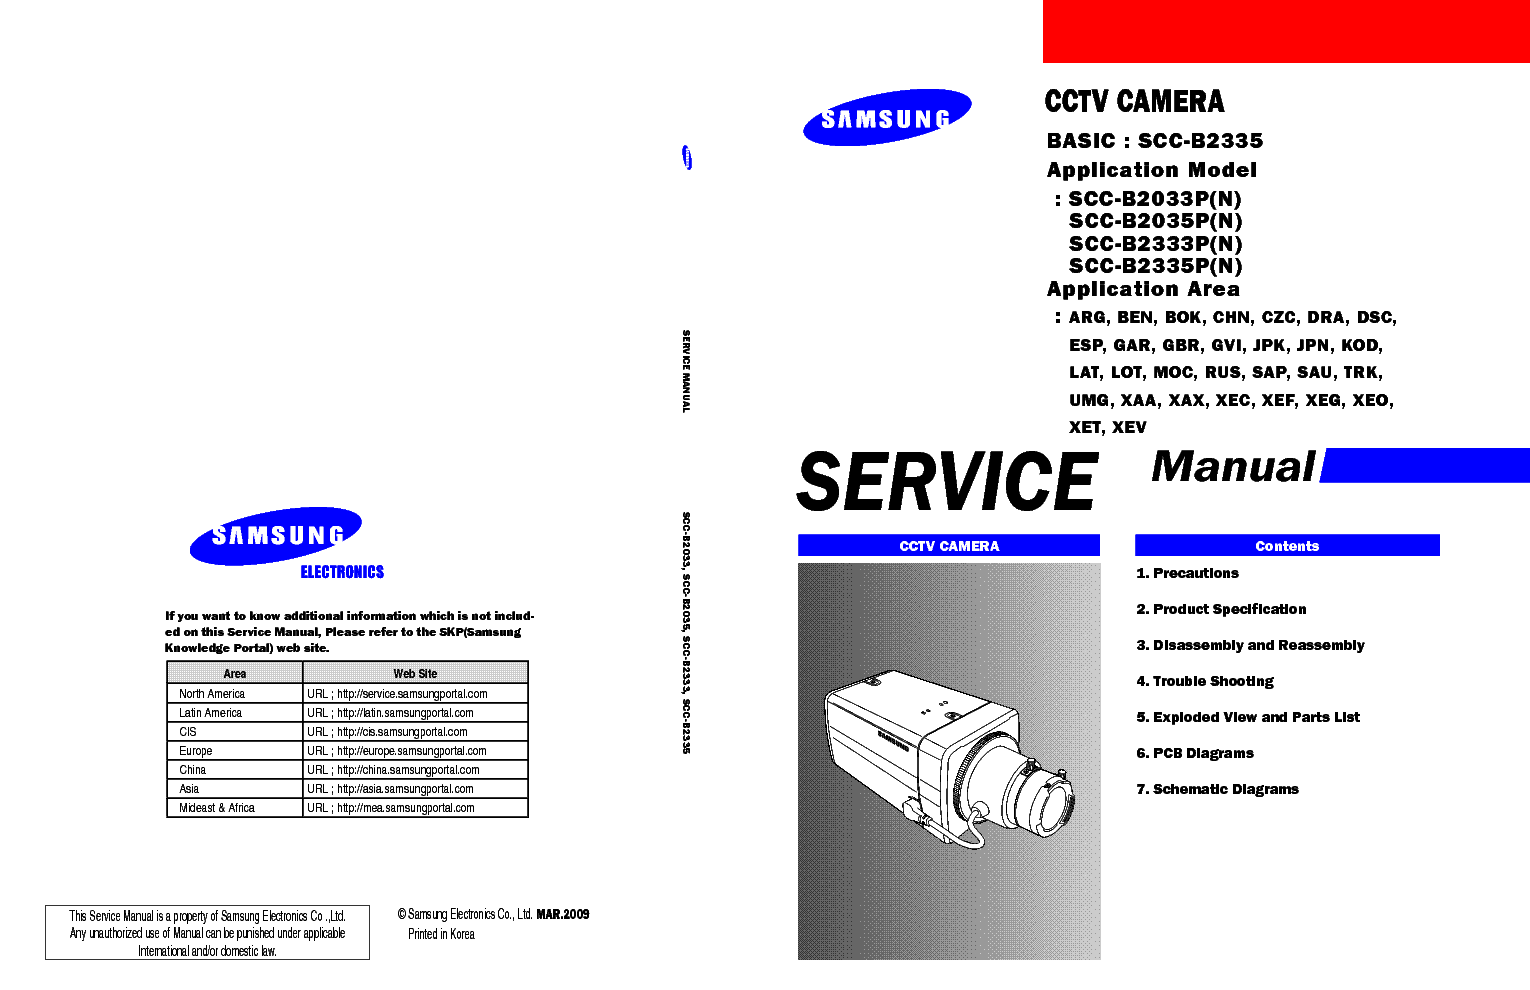 Cctv camera manual pdf